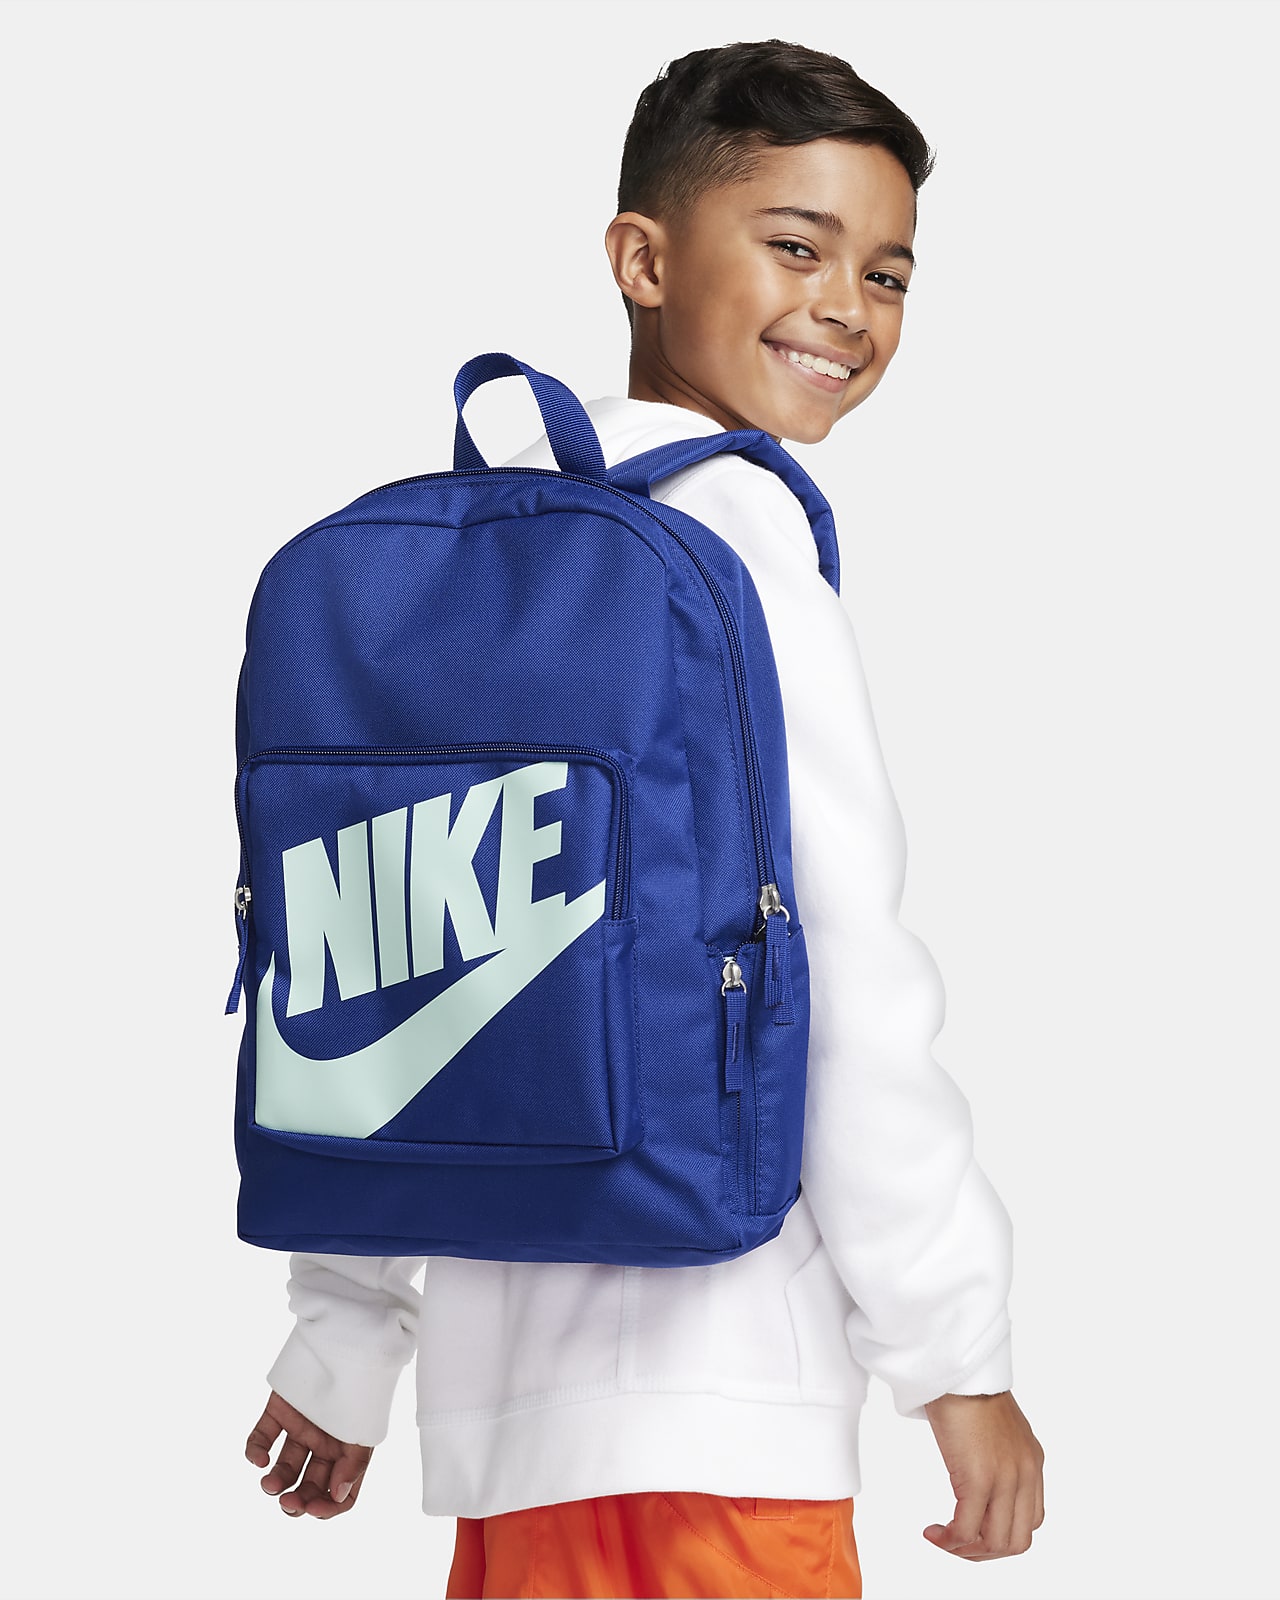 Nike Backpack ugel01ep.gob.pe